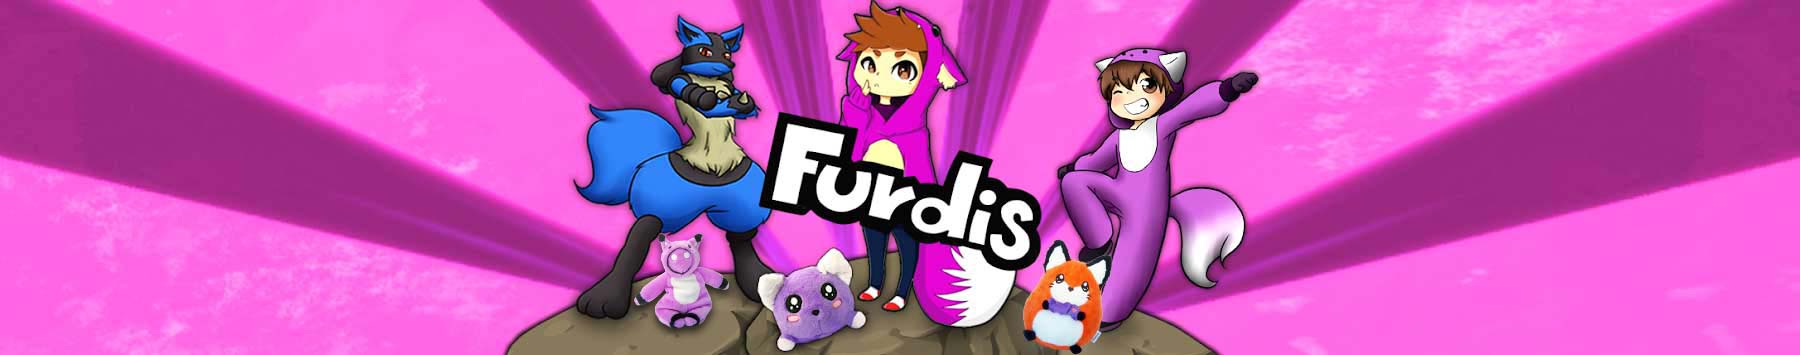 Furdis Fuchs Fufu Merchandise Shop